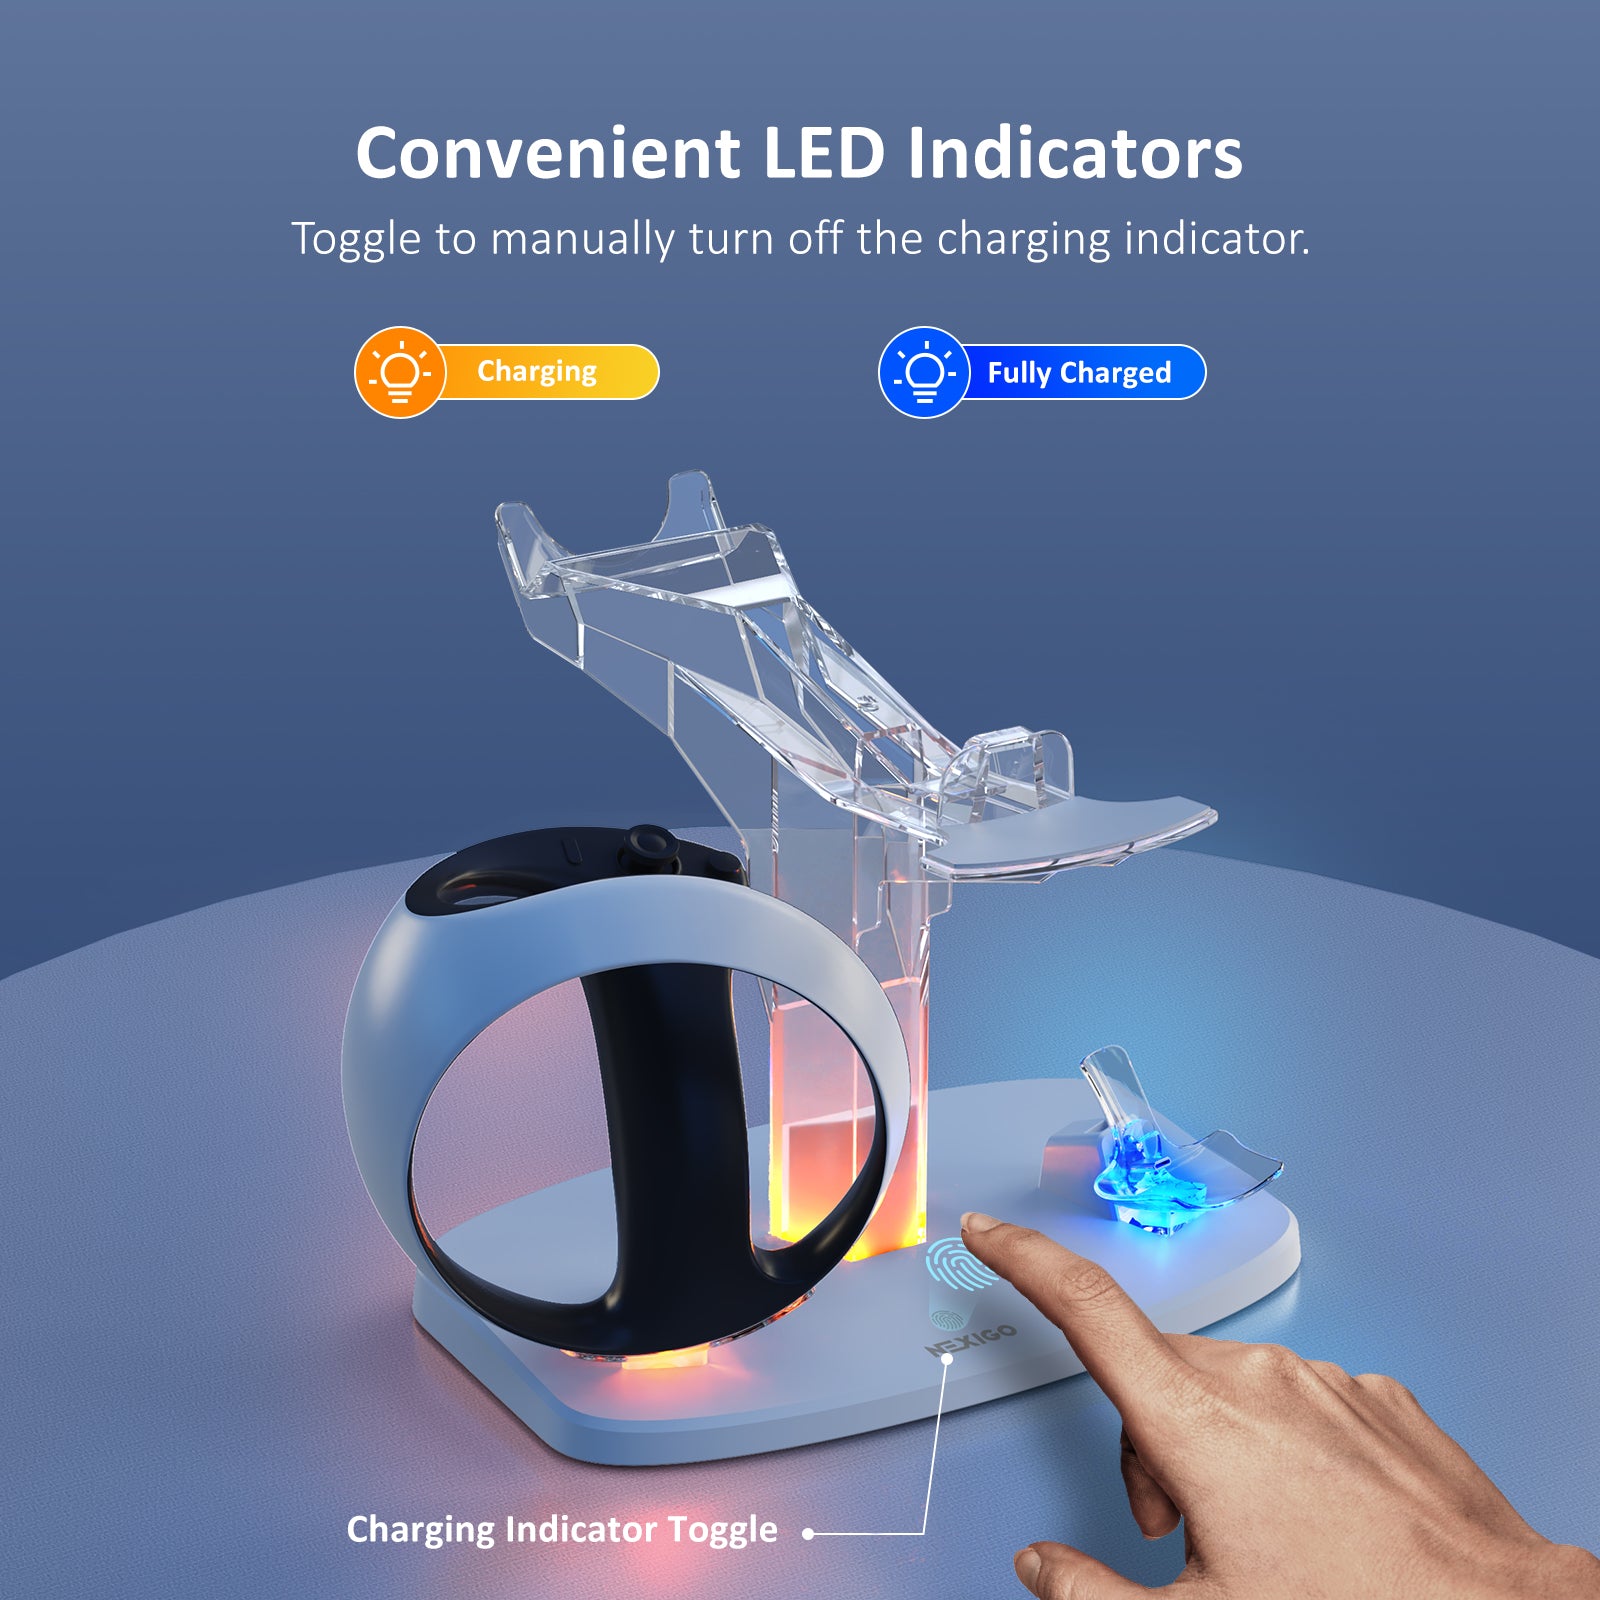 LED Charging Indicators: Orange light for charging, Blue light for full charged